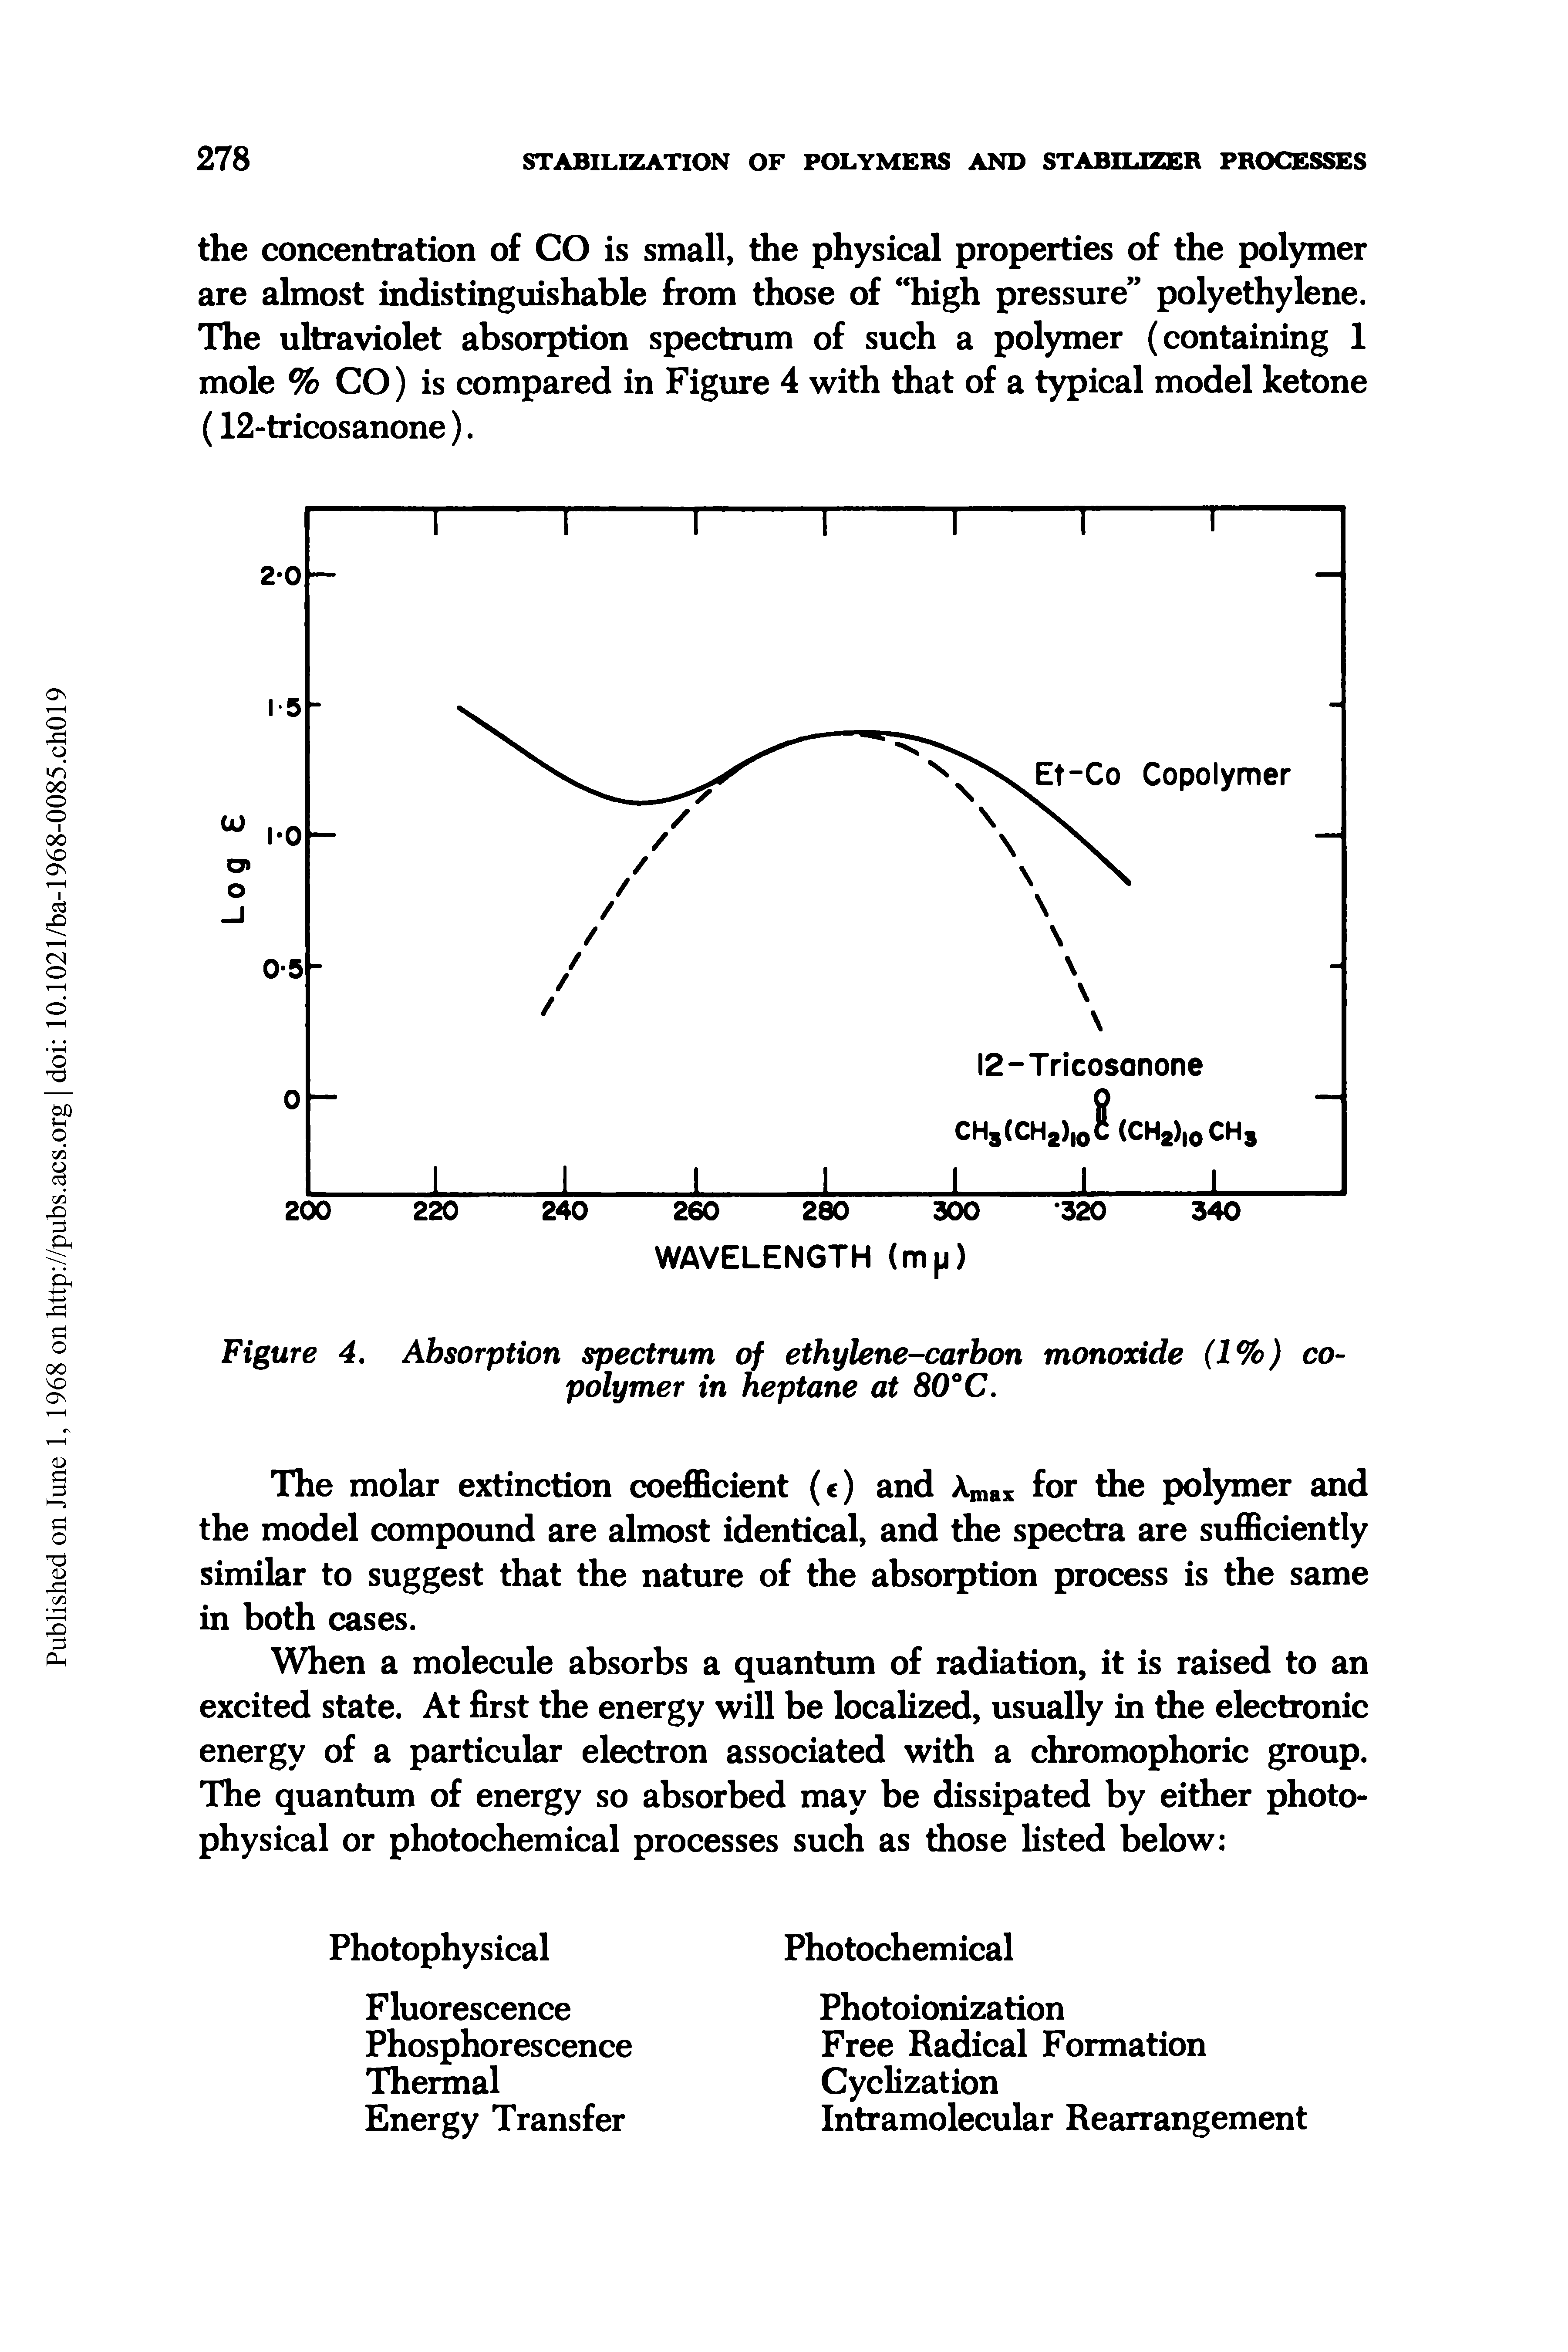 Figure 4. Absorption spectrum of ethylene-carbon monoxide (1%) copolymer in heptane at 80°C.